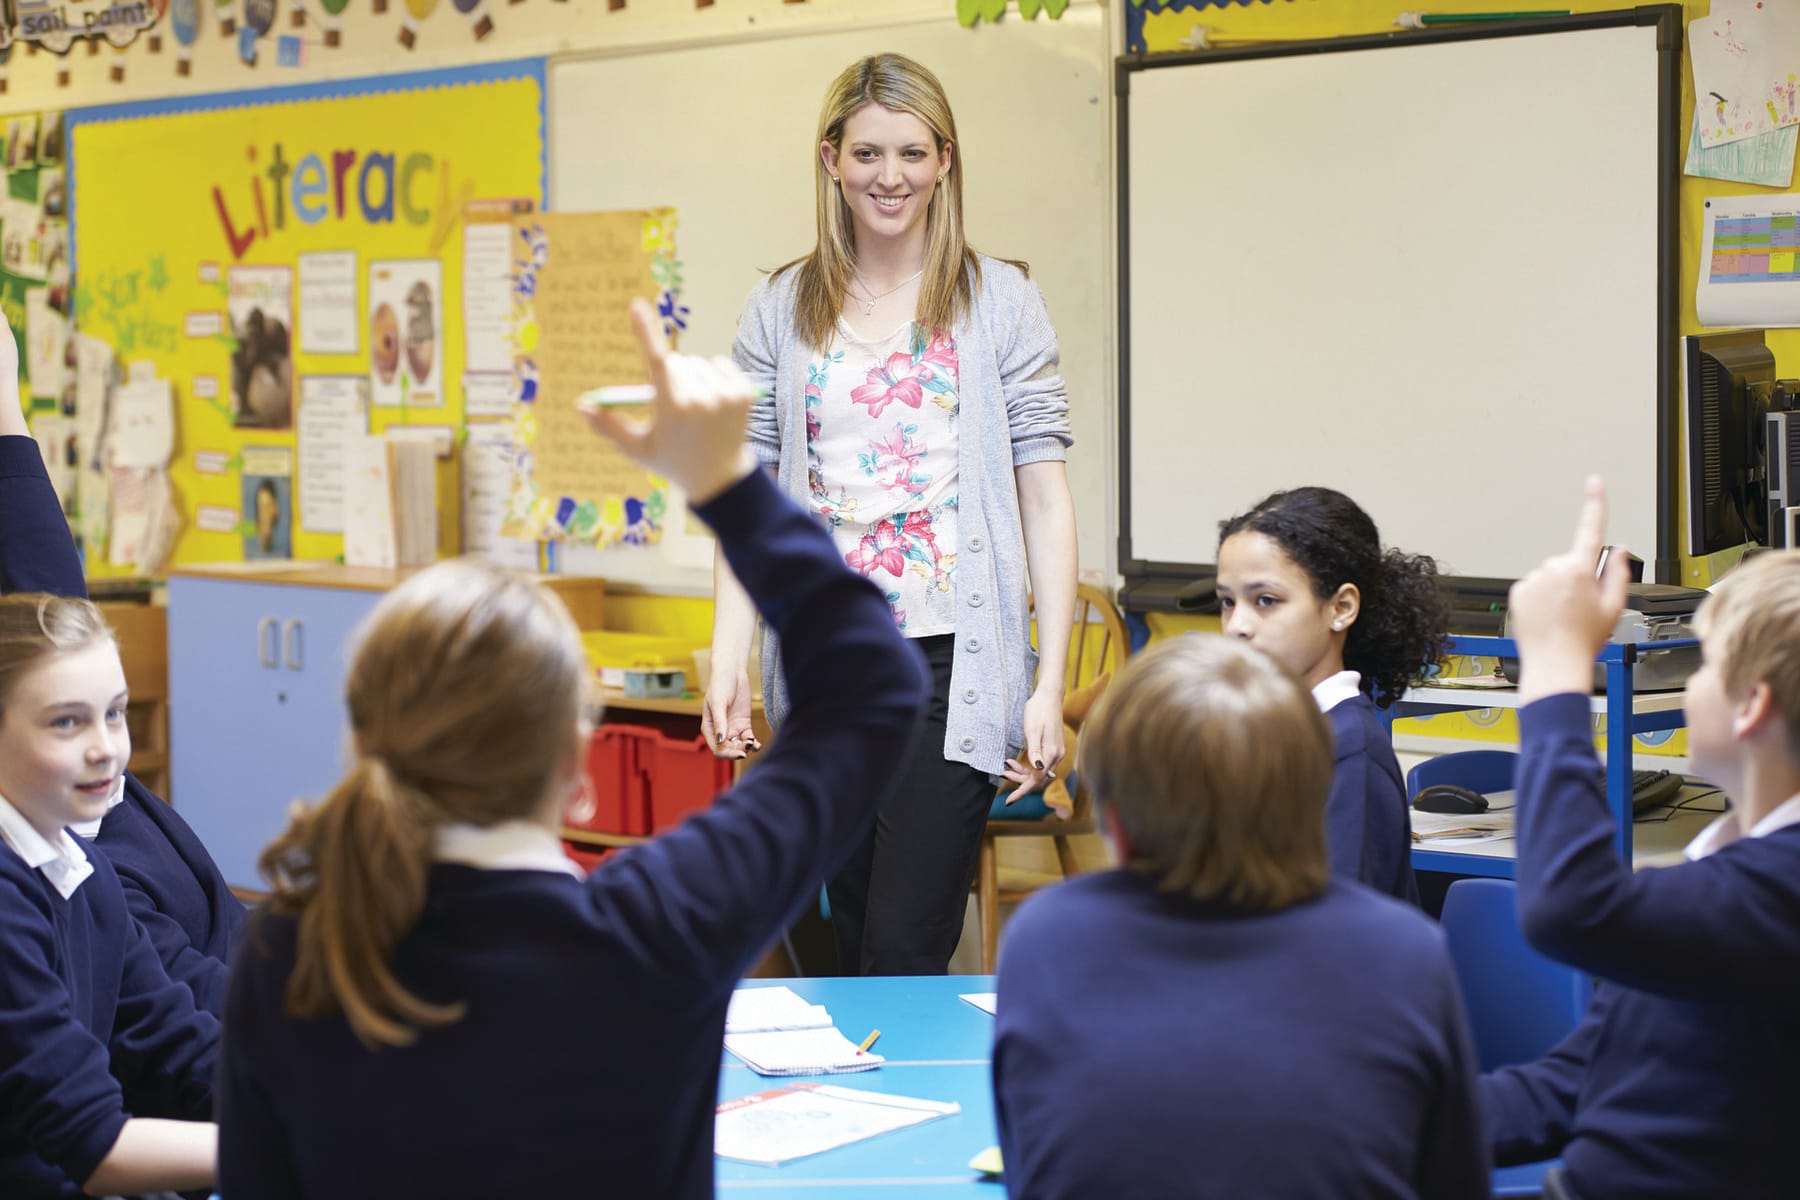 Students raising their hands while their teacher smiles in class